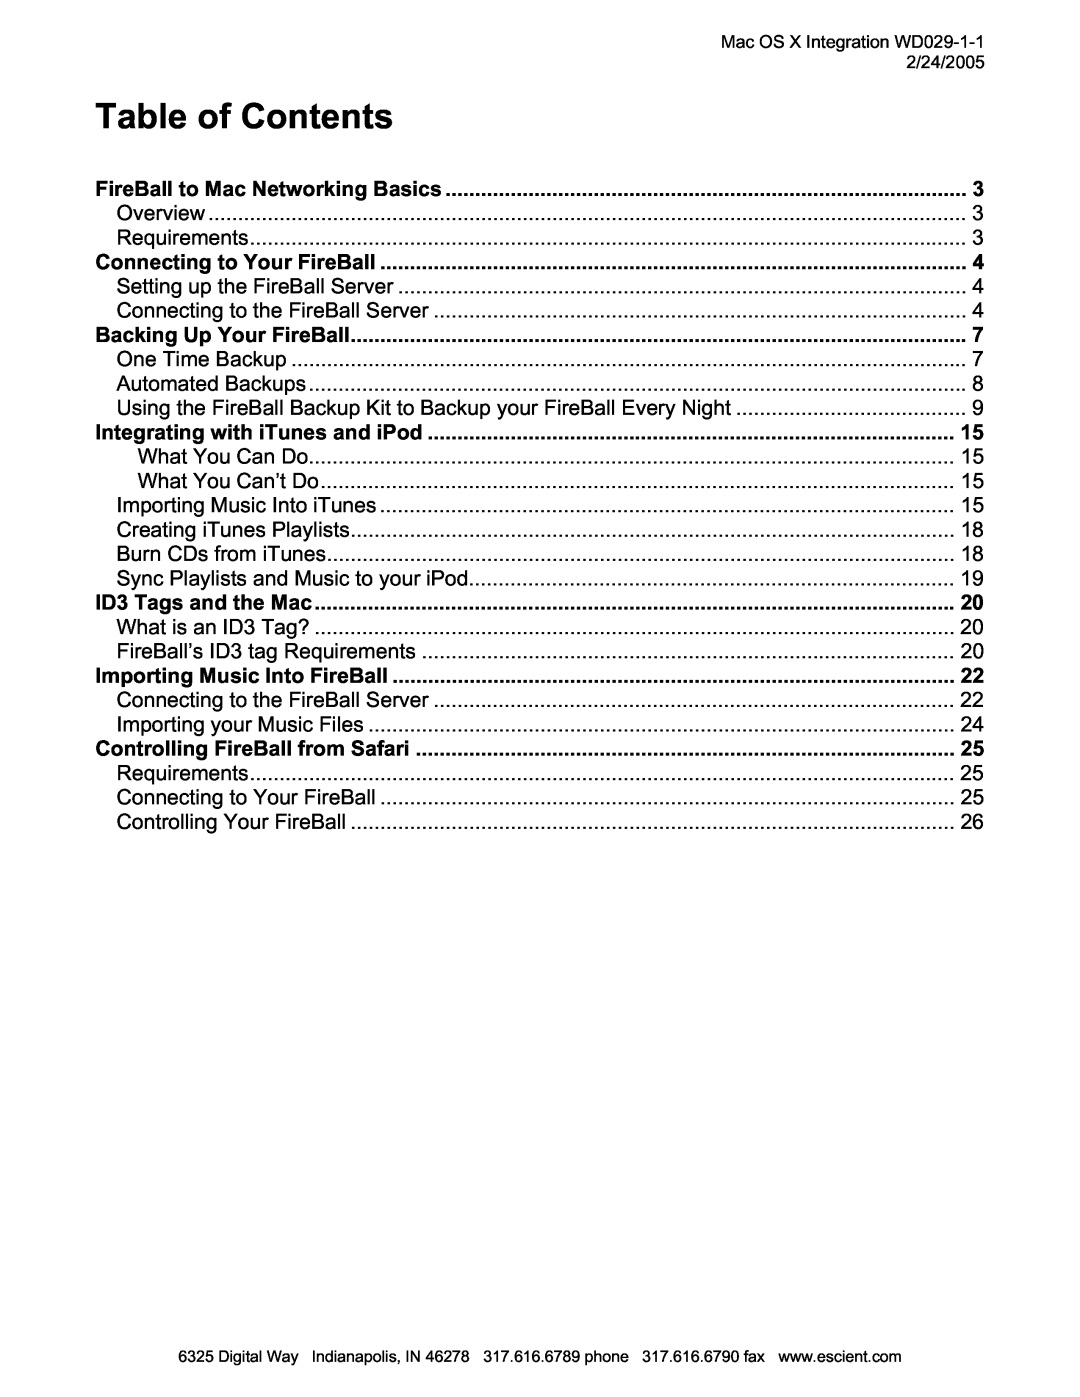 Escient MP-150 manual Table of Contents, FireBall to Mac Networking Basics 